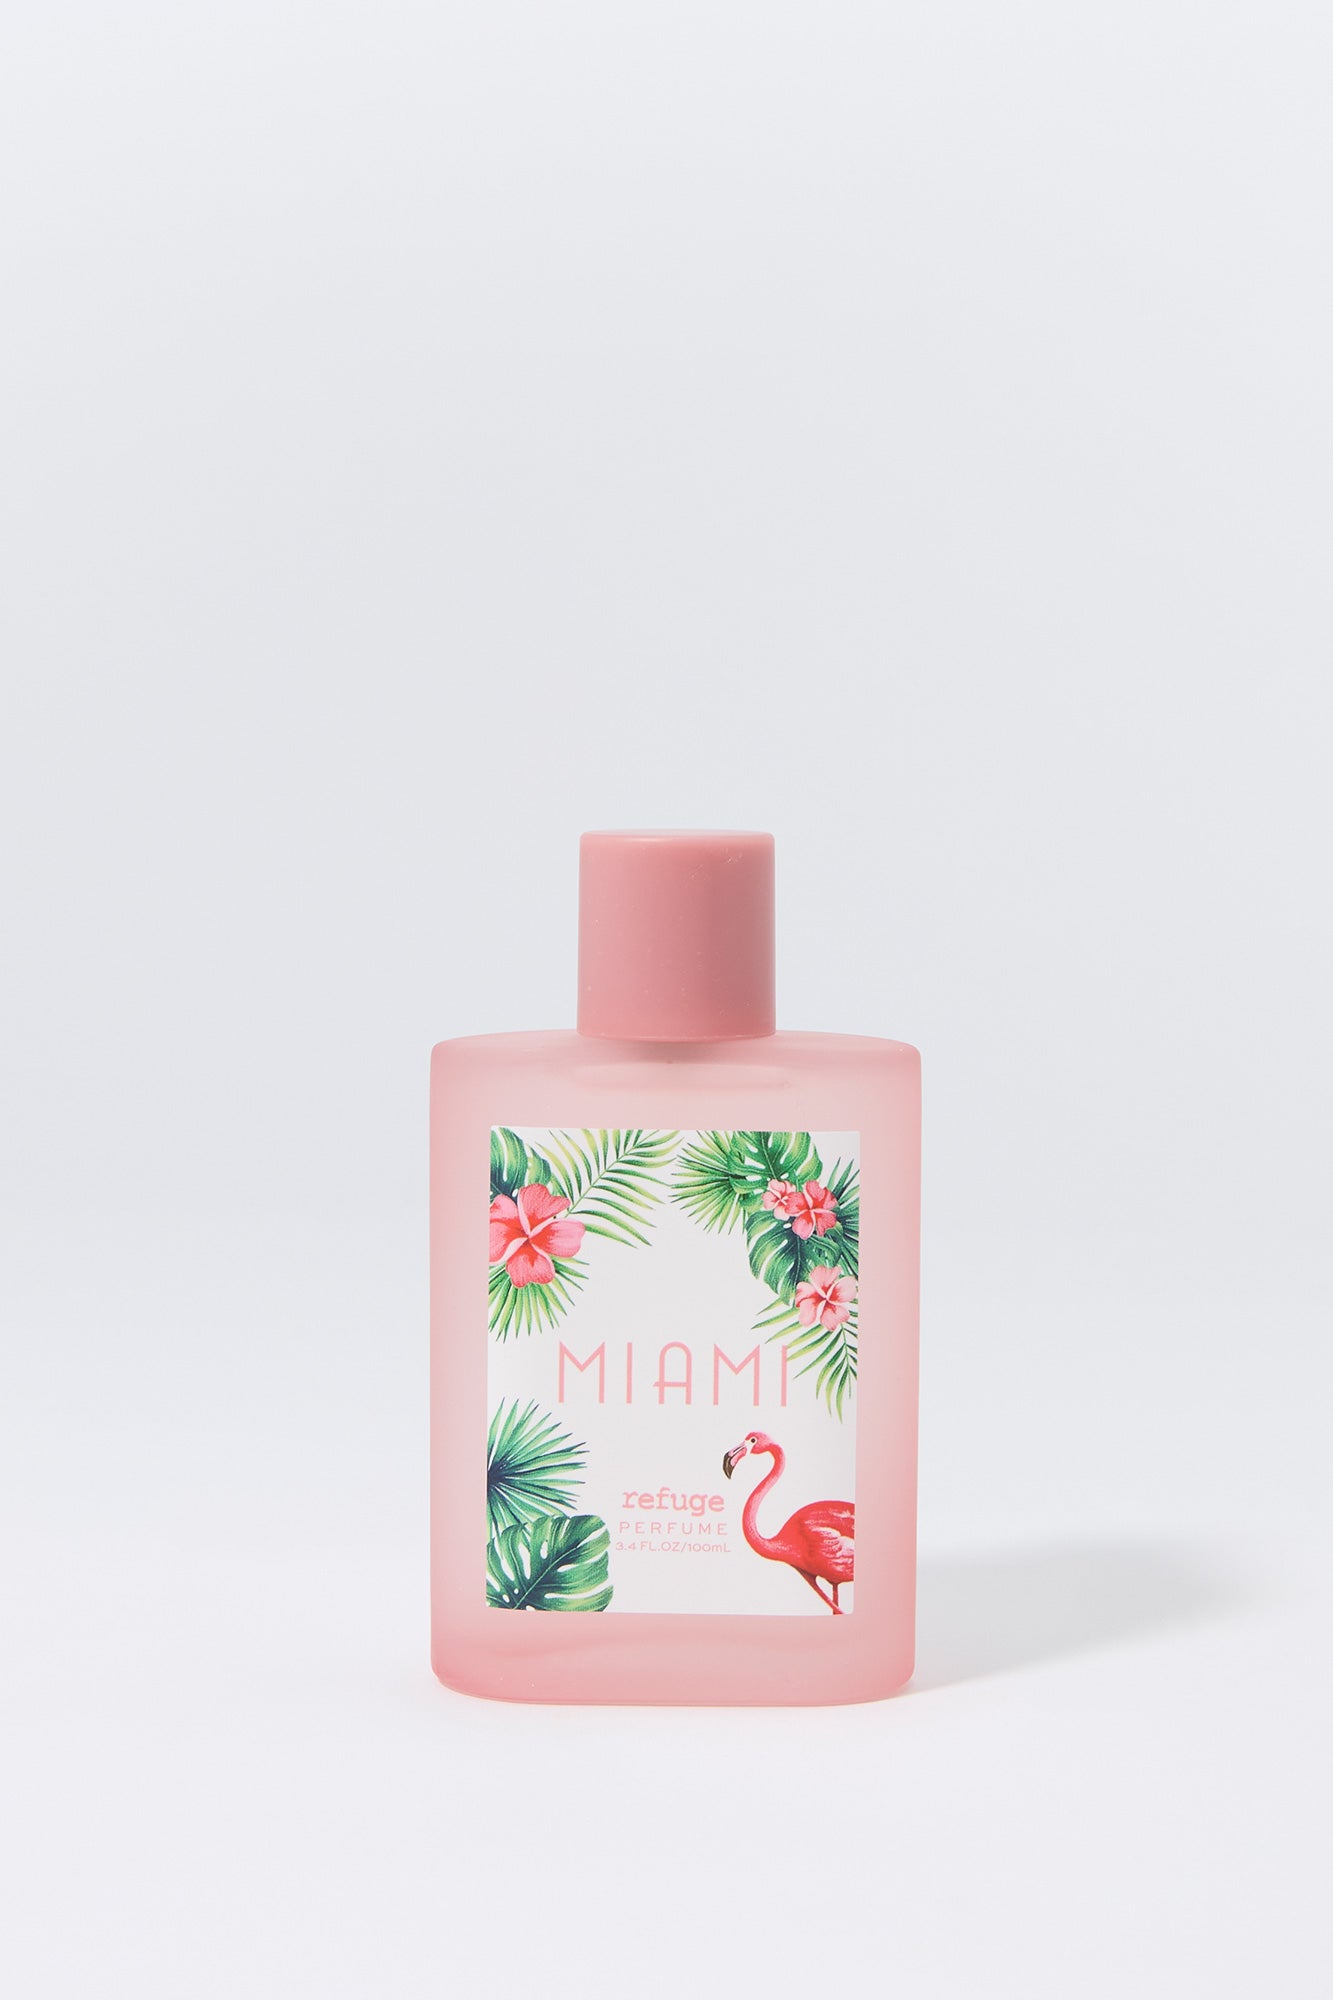 100 ml Miami Refuge Perfume